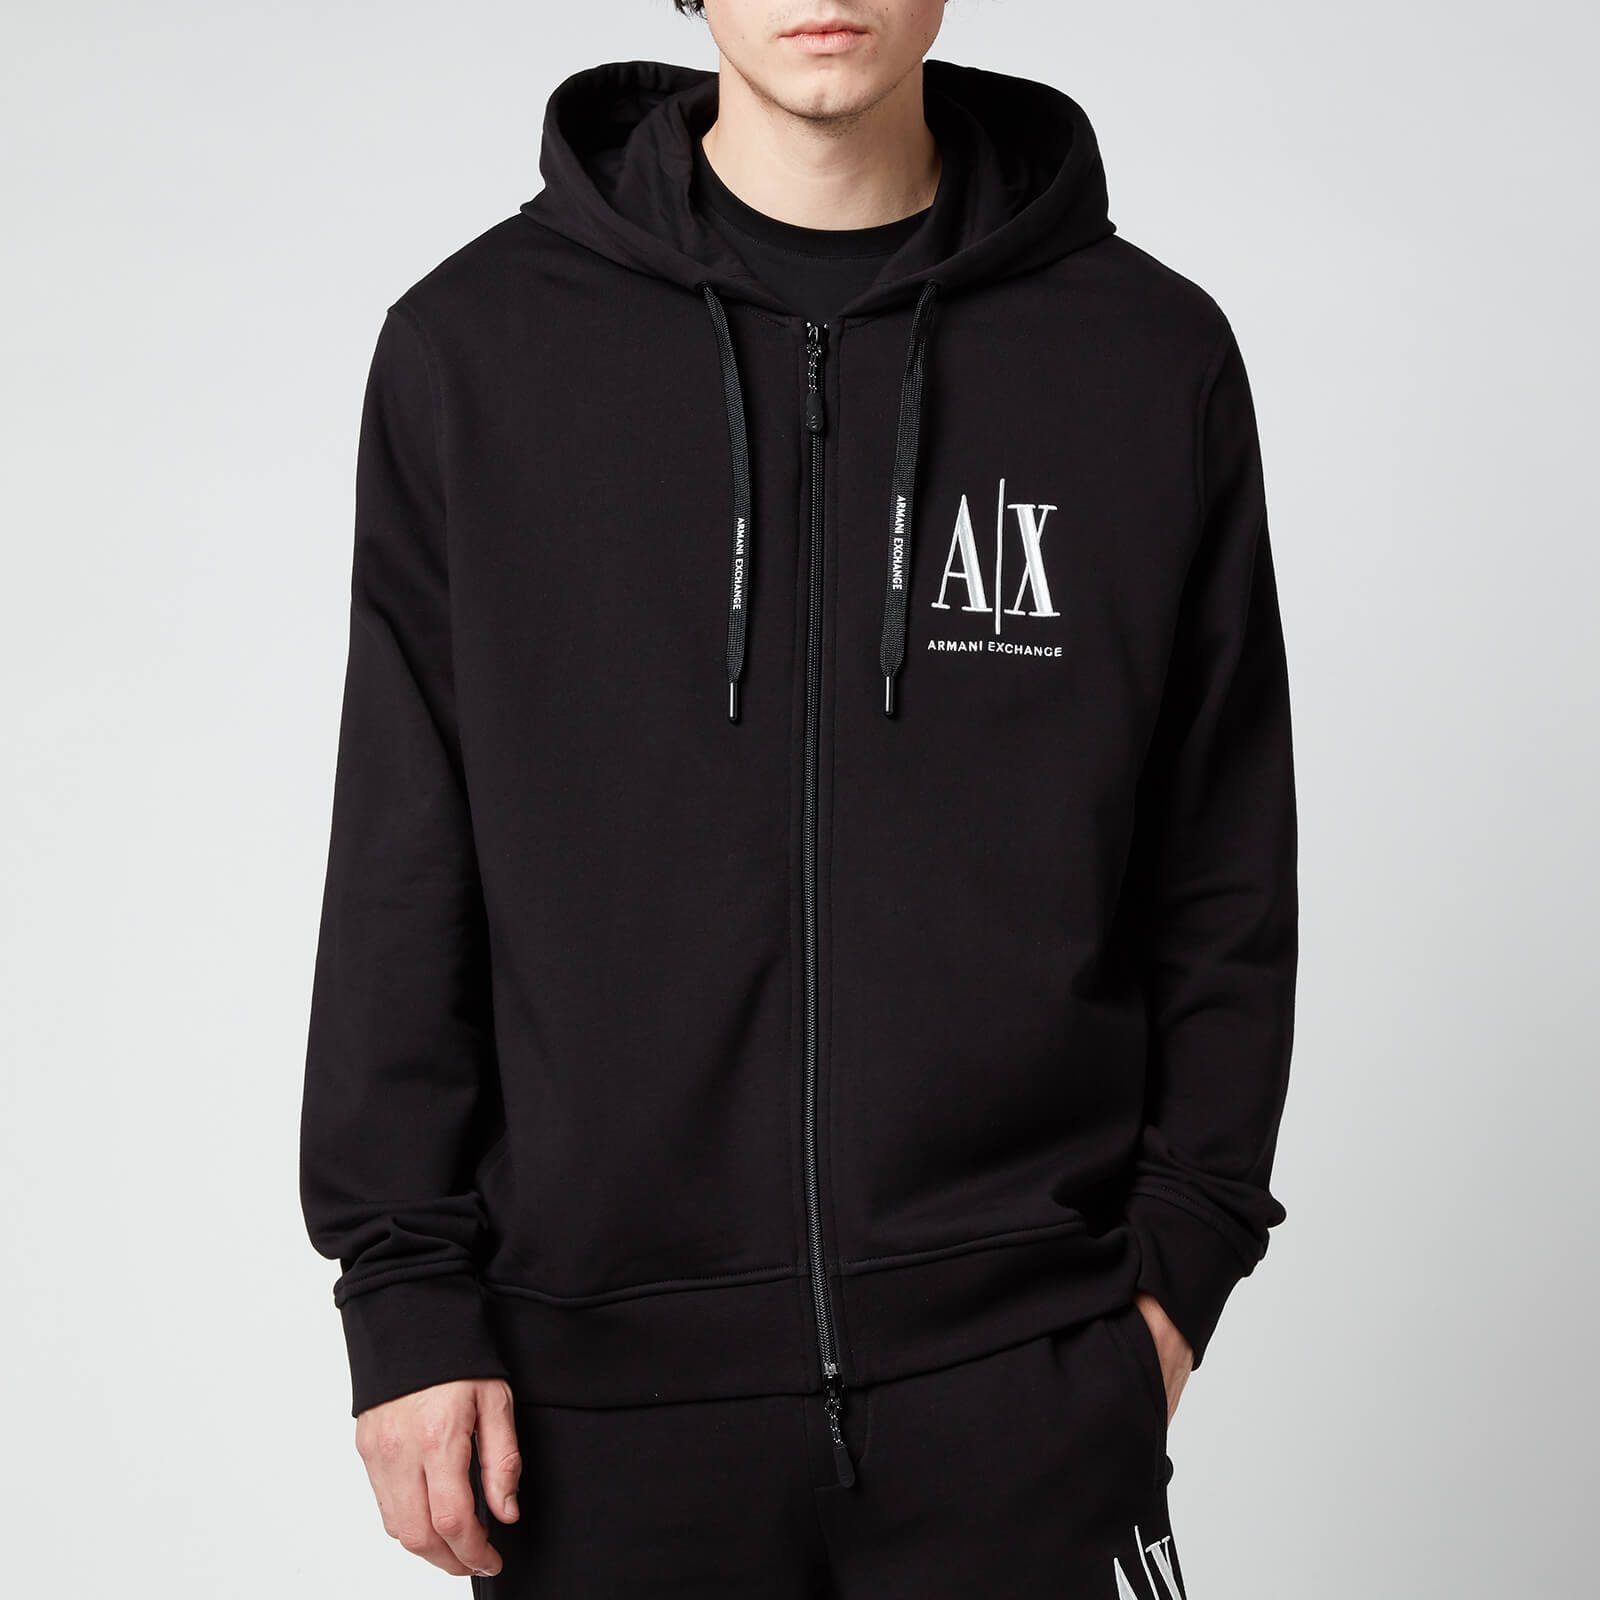 armani exchange men's ax logo zip hoodie - black - l